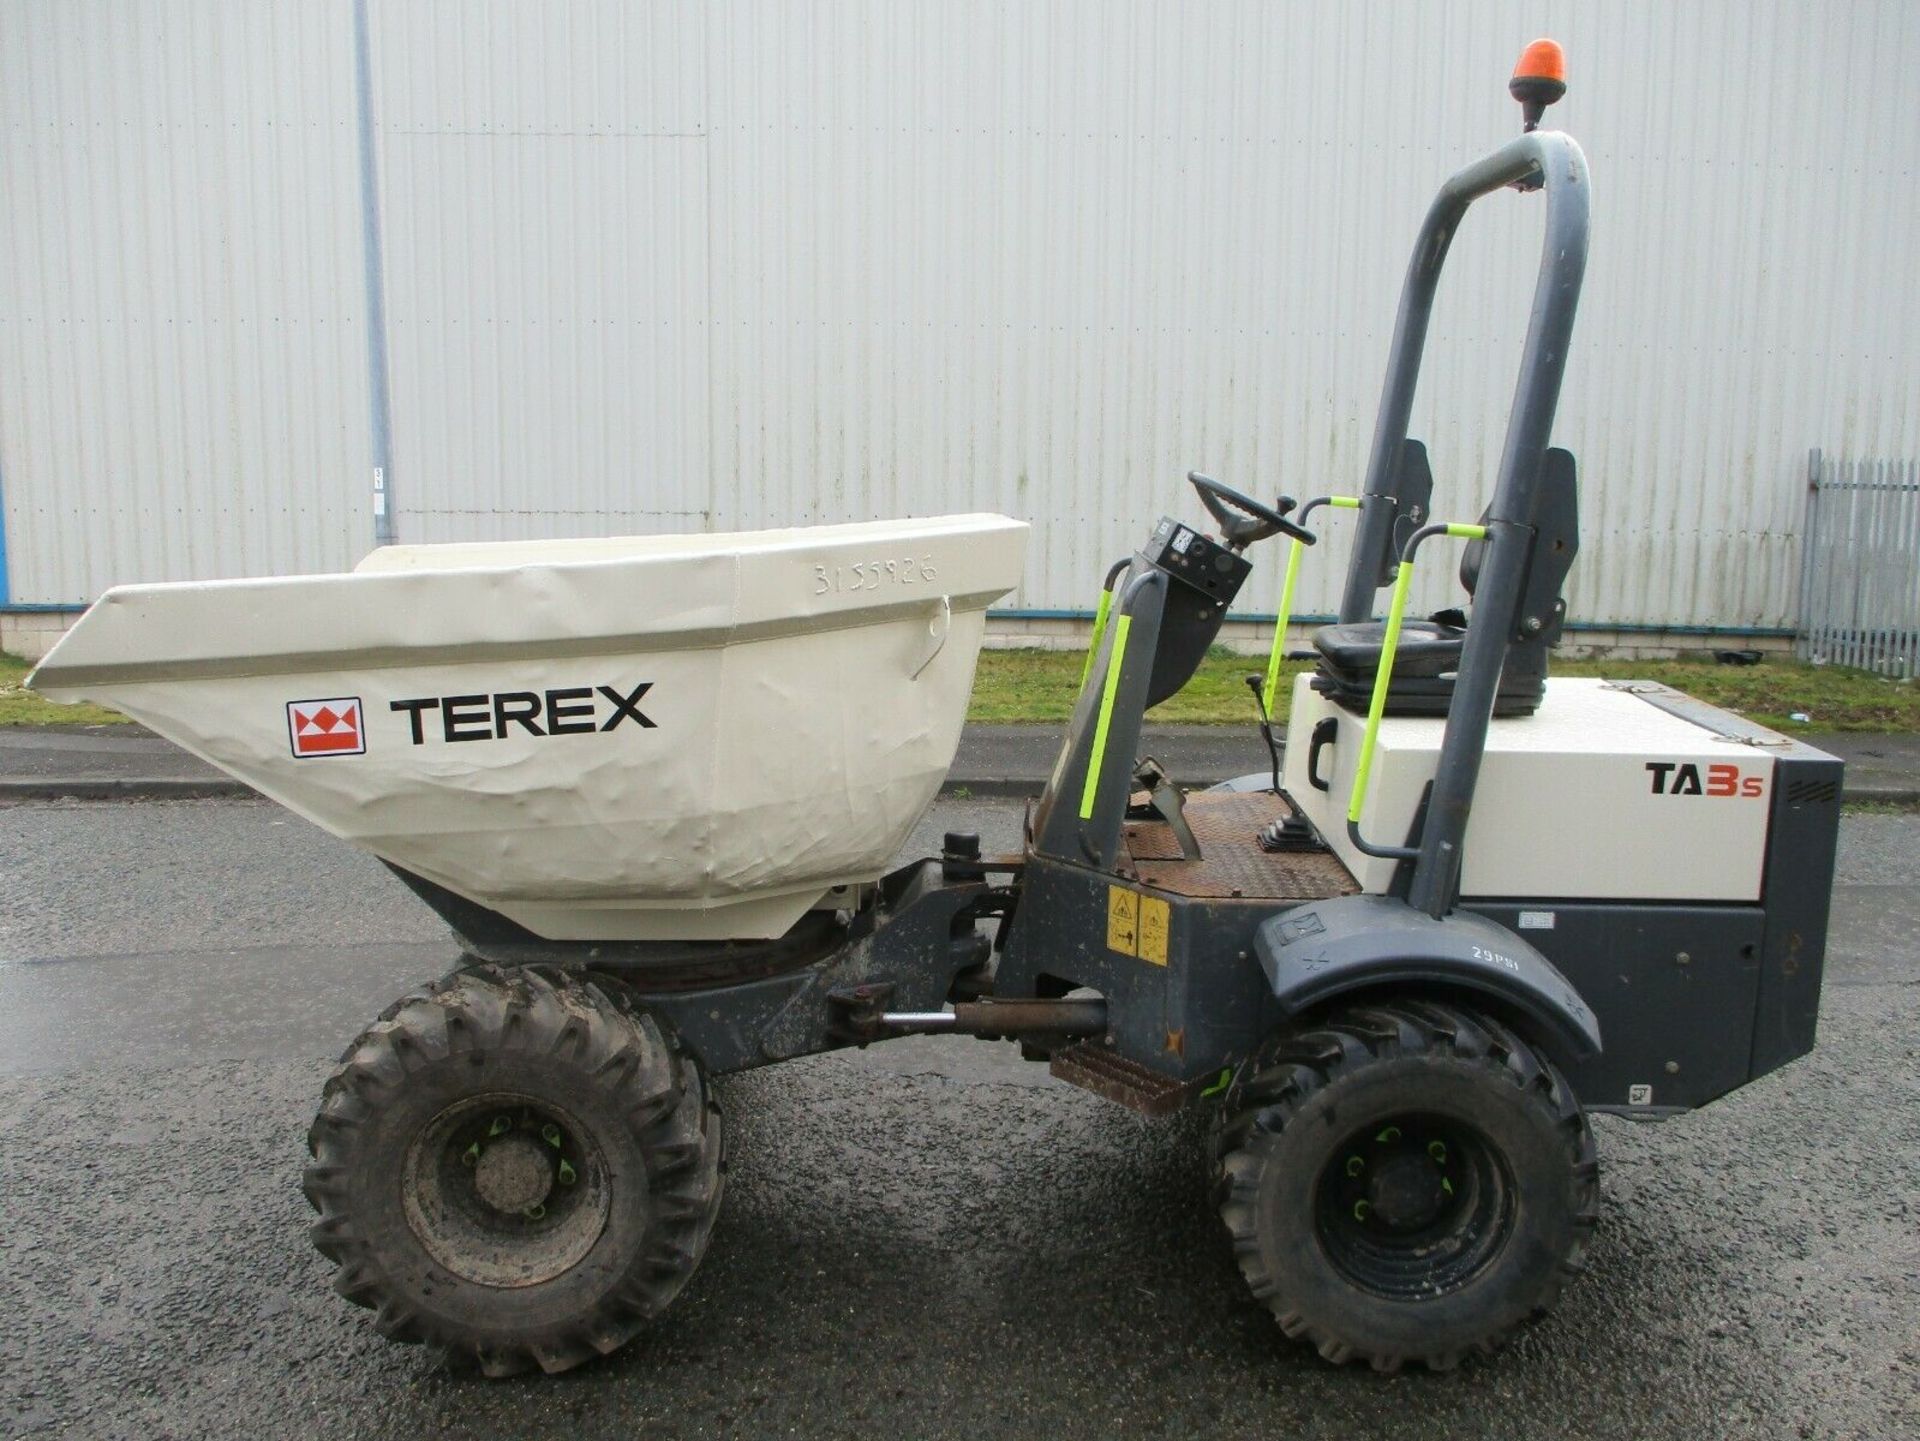 Terex TA3s 3 Ton Dumper - Image 9 of 10